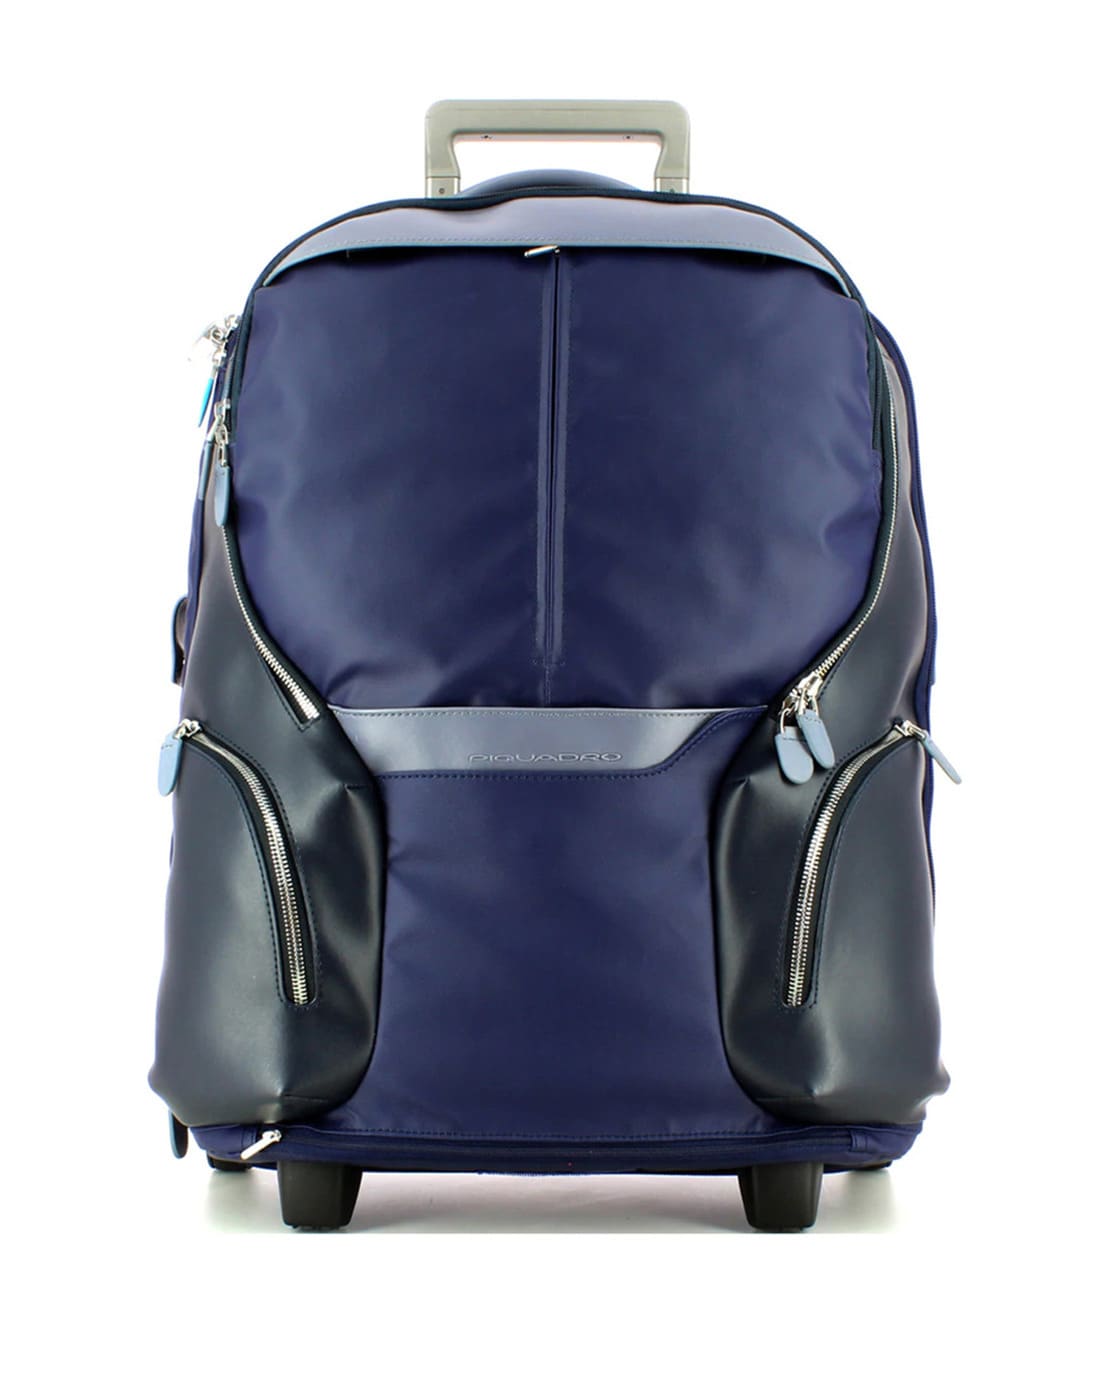 Leather Travel Bag/Backpack, Piquadro, model BV6241W118/N, black